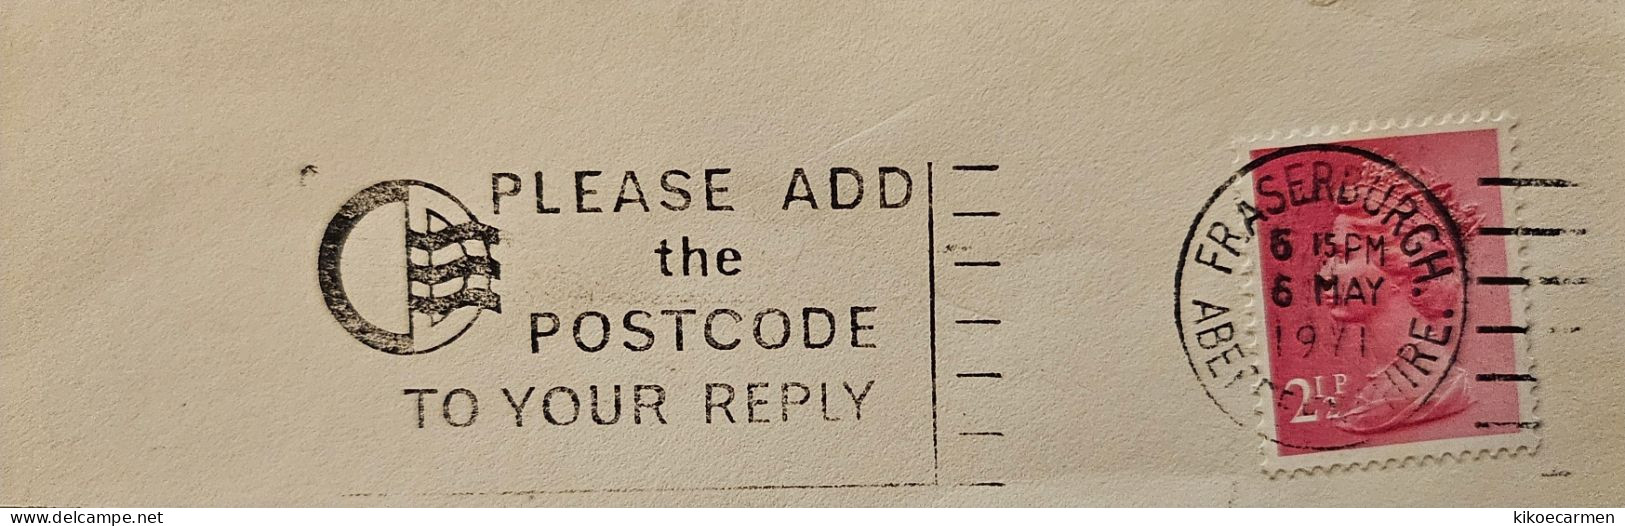 ZIP CODE Postal Code History Of Post Cancel Cancellation Postmark - Postcode